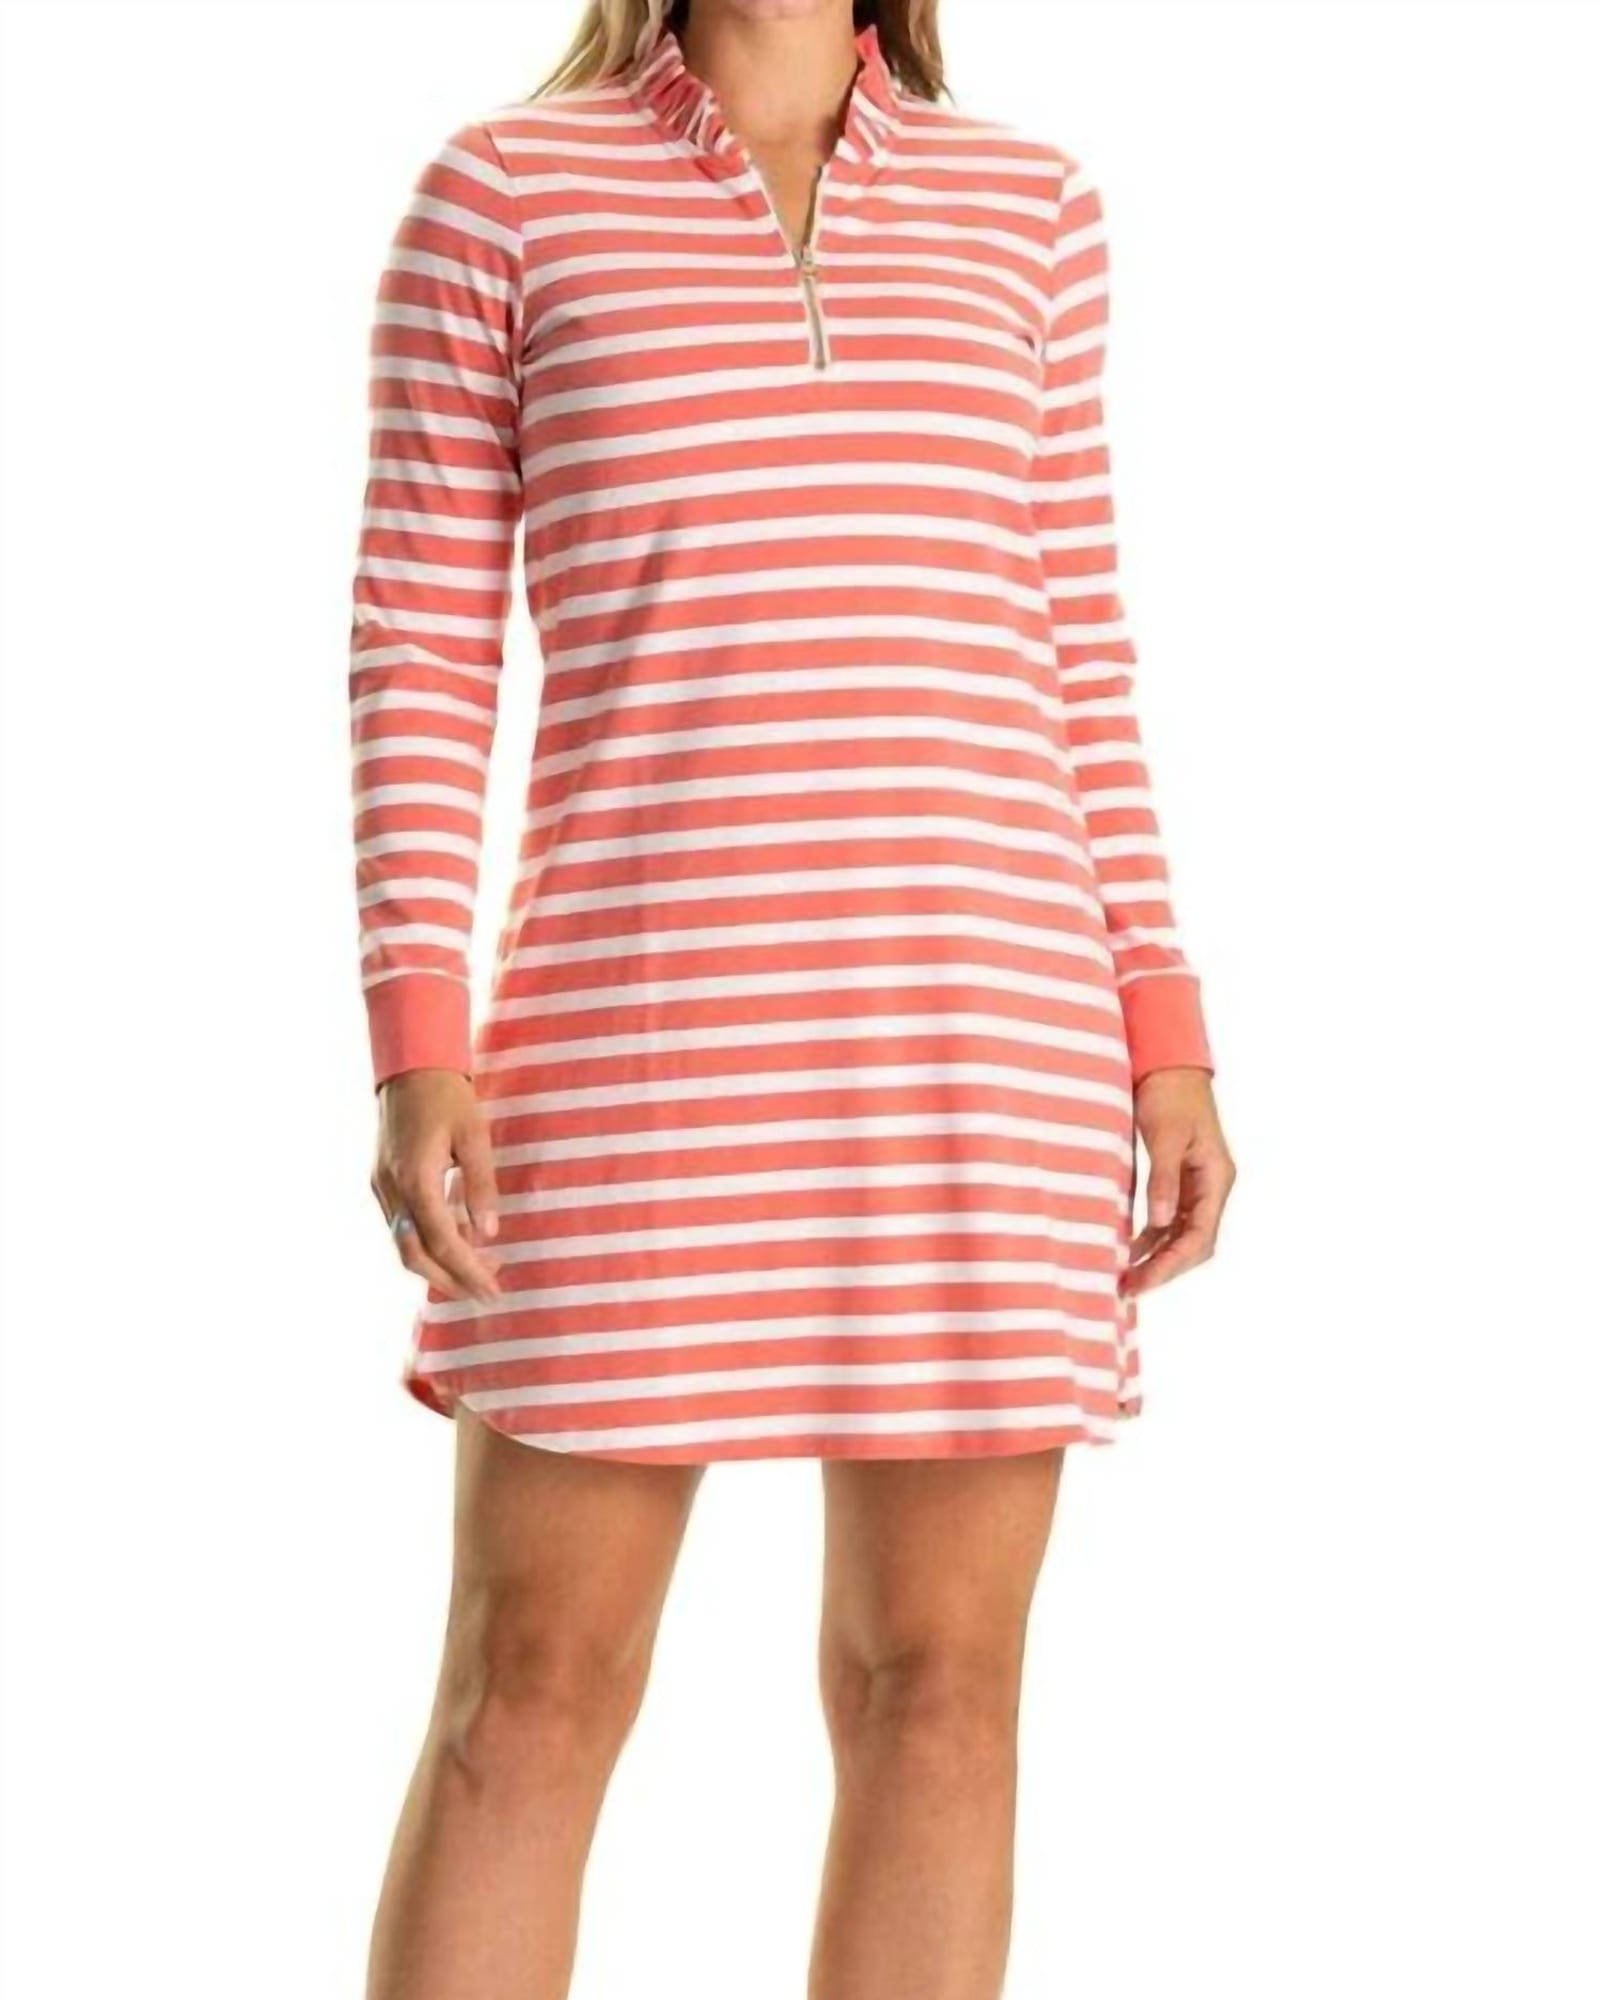 Solange Dress In Coral/White Stripe | Coral/White Stripe